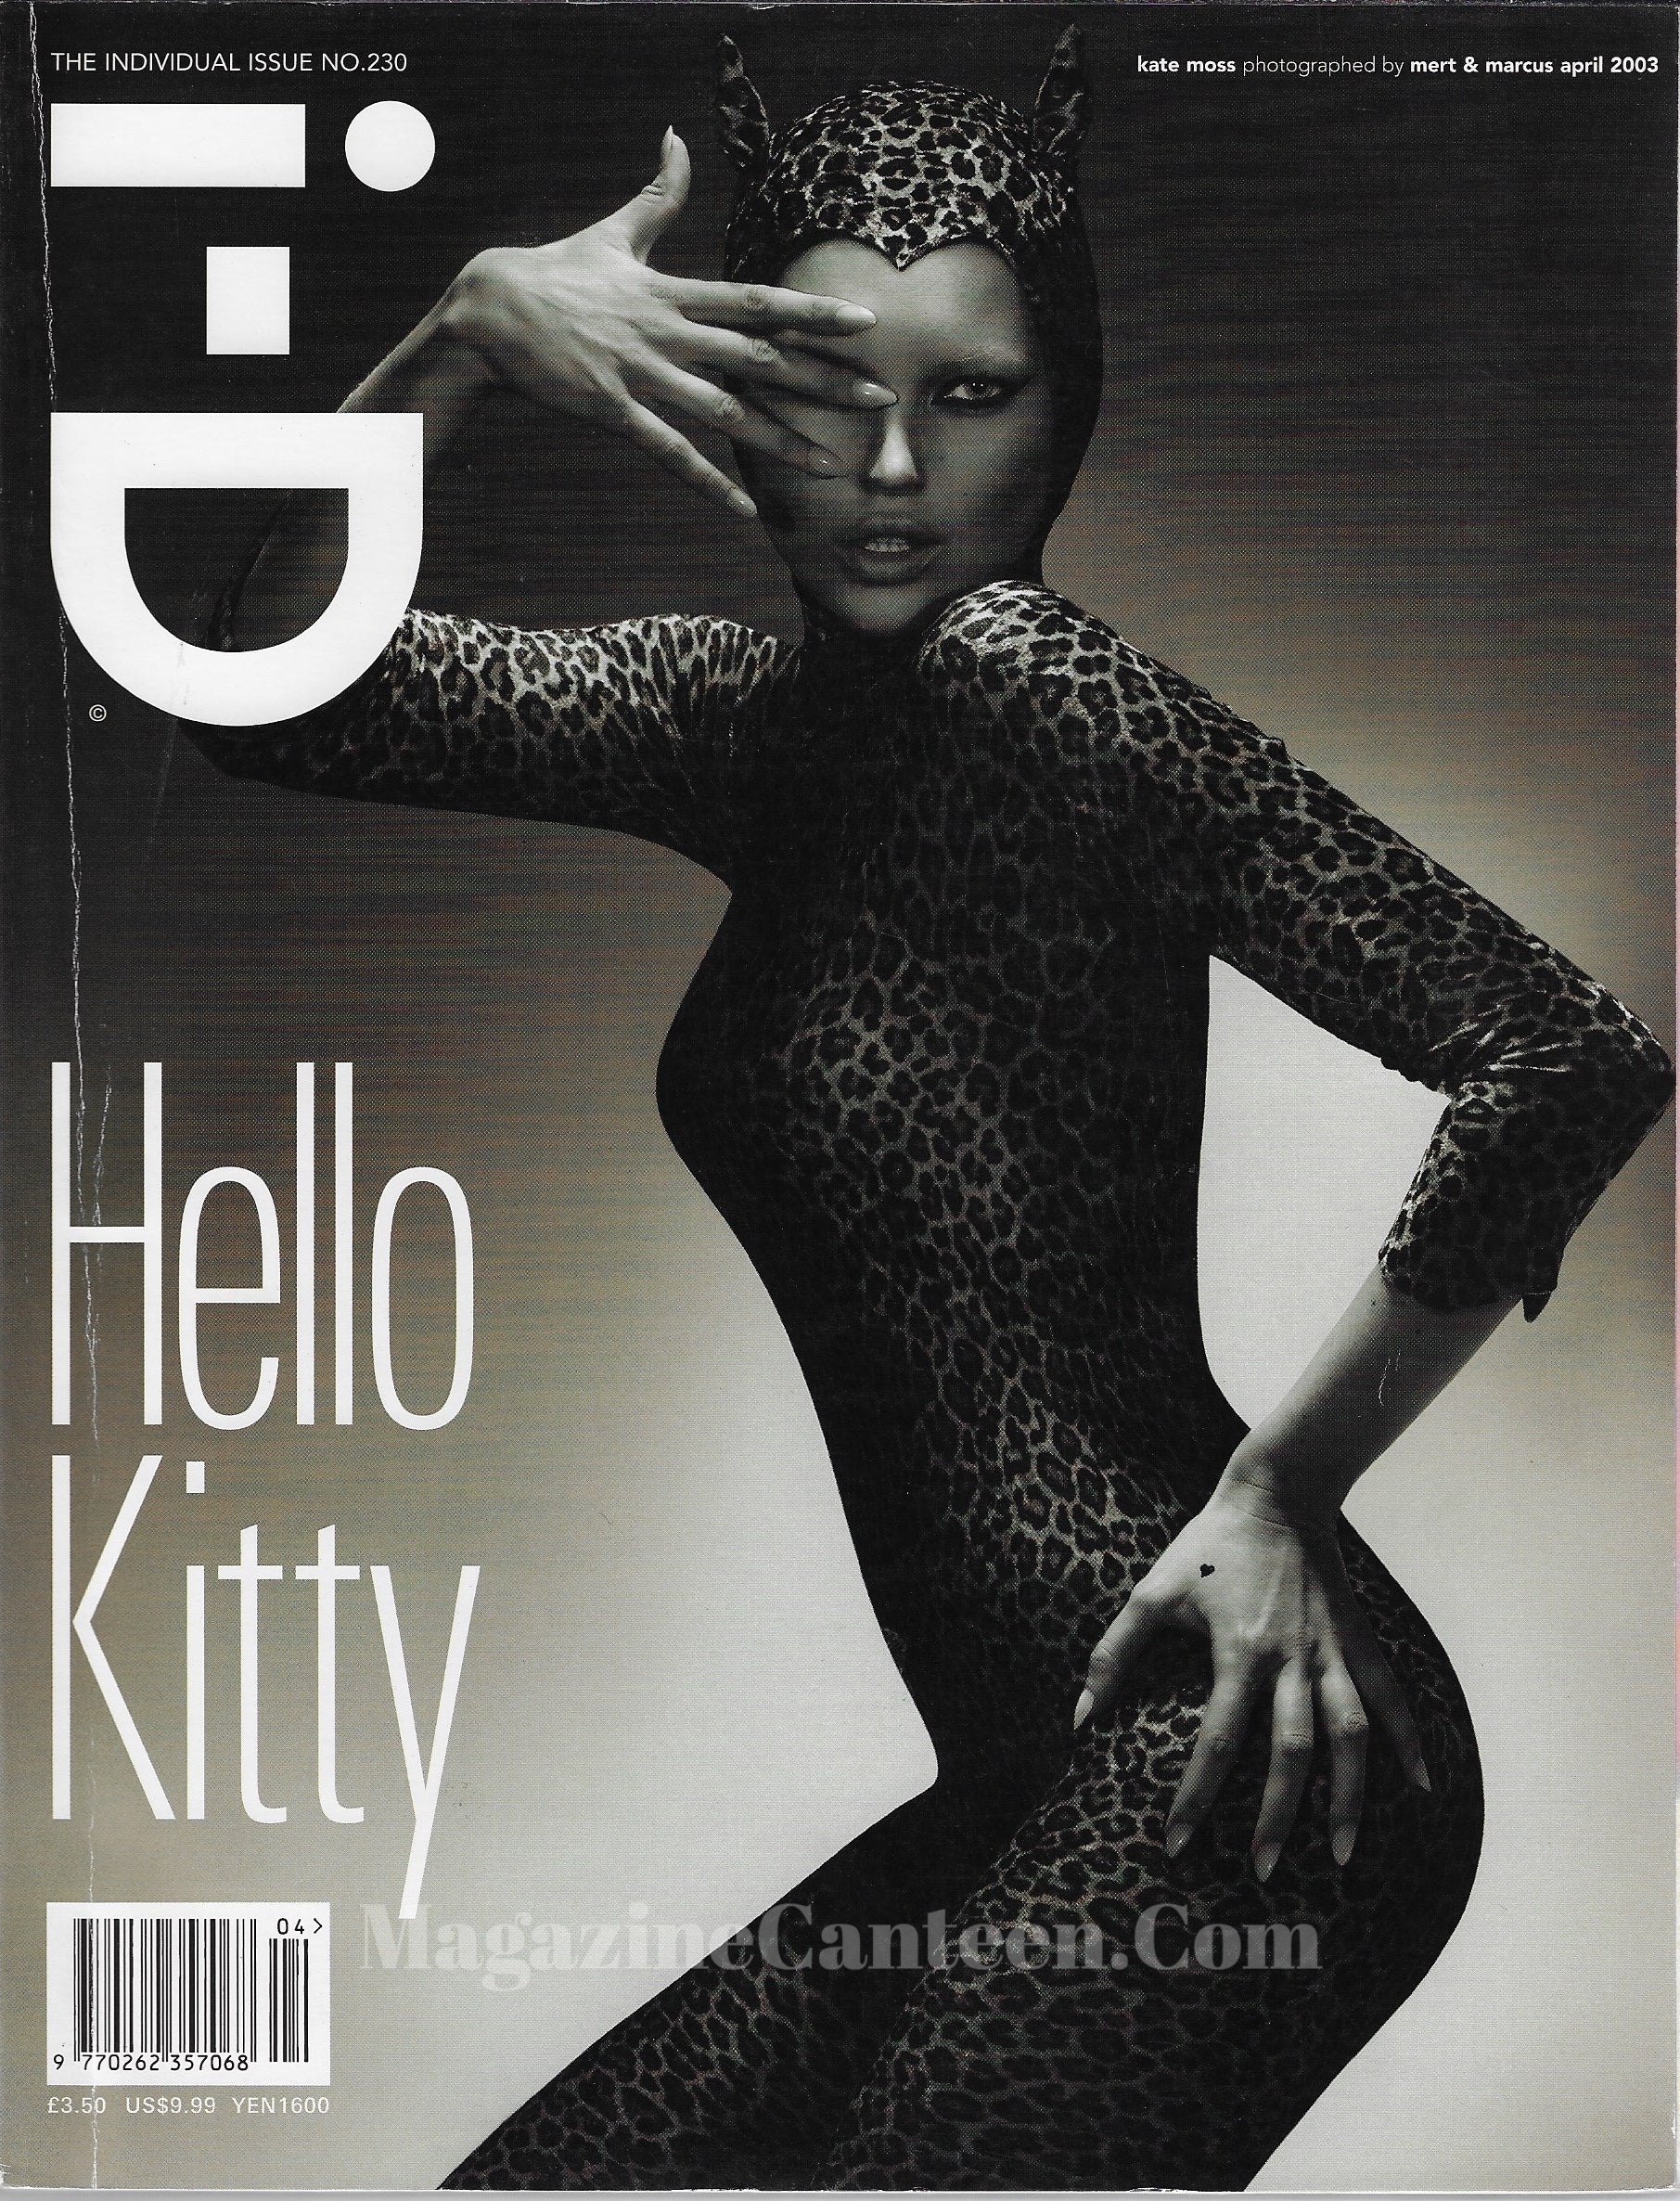 I-D Magazine 230 - Kate Moss 2003 – magazine canteen